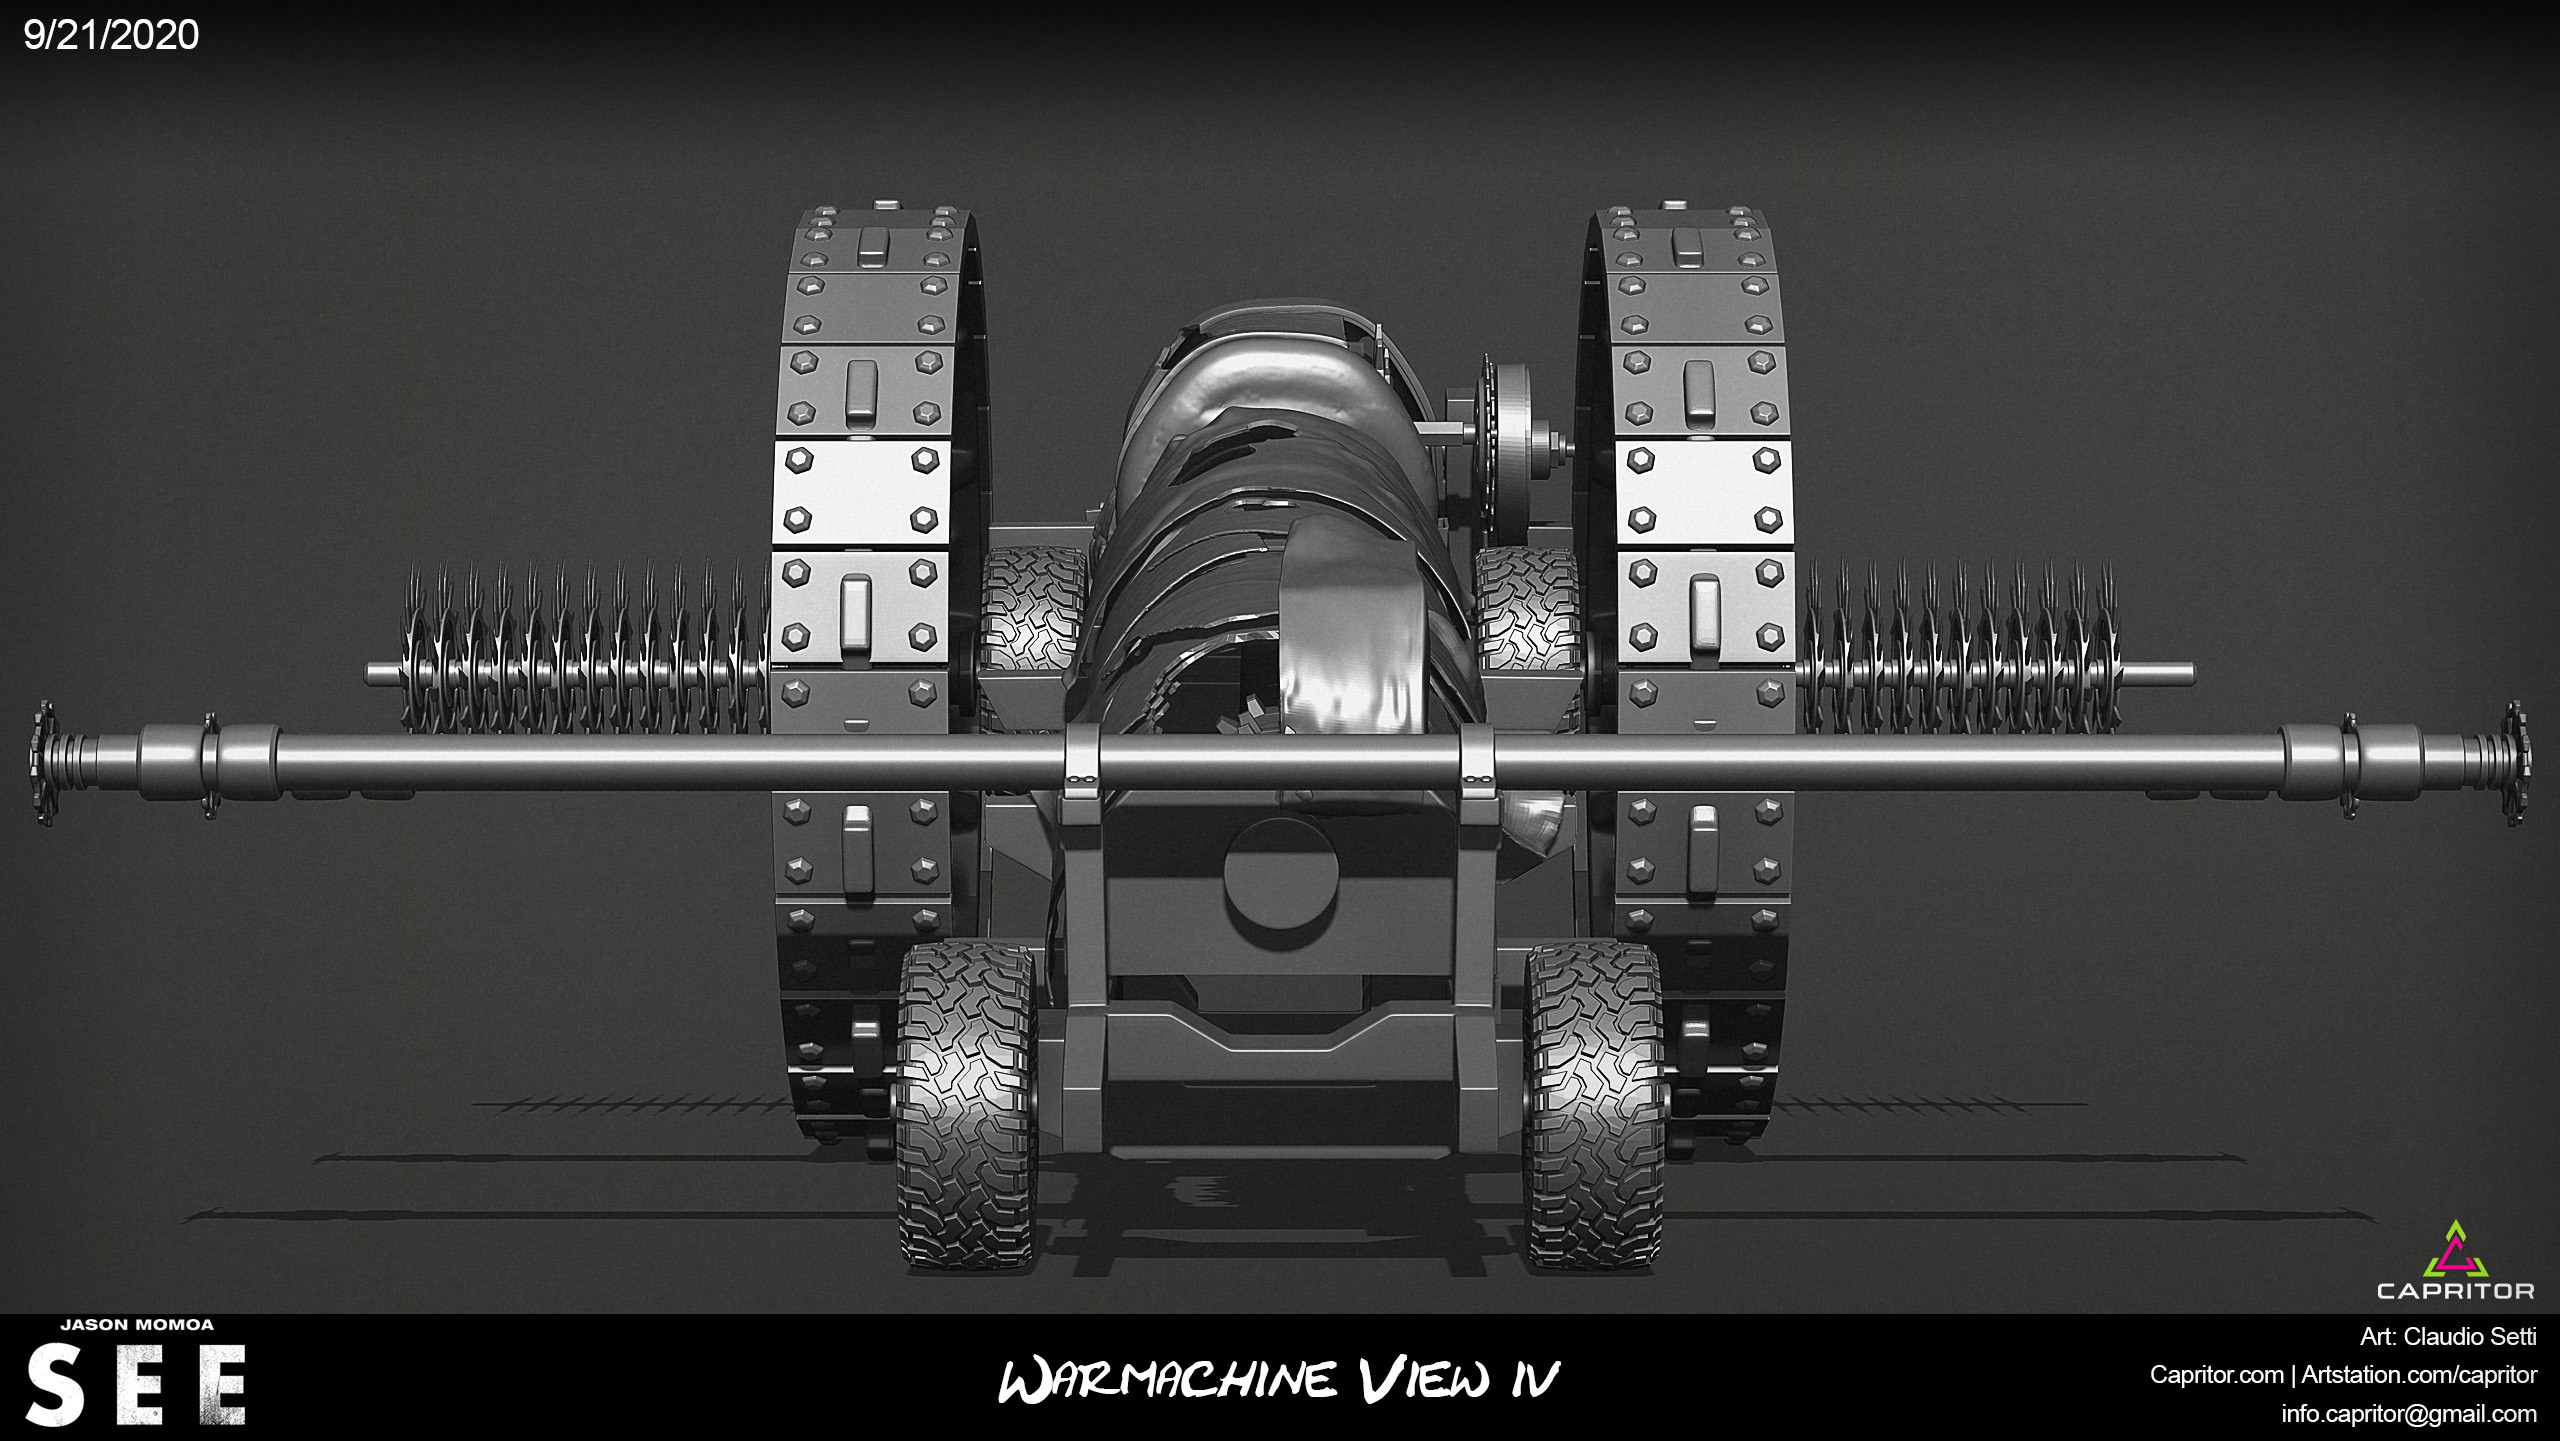 Jason Momoa - SEE - Warmachine Concept Design View 4